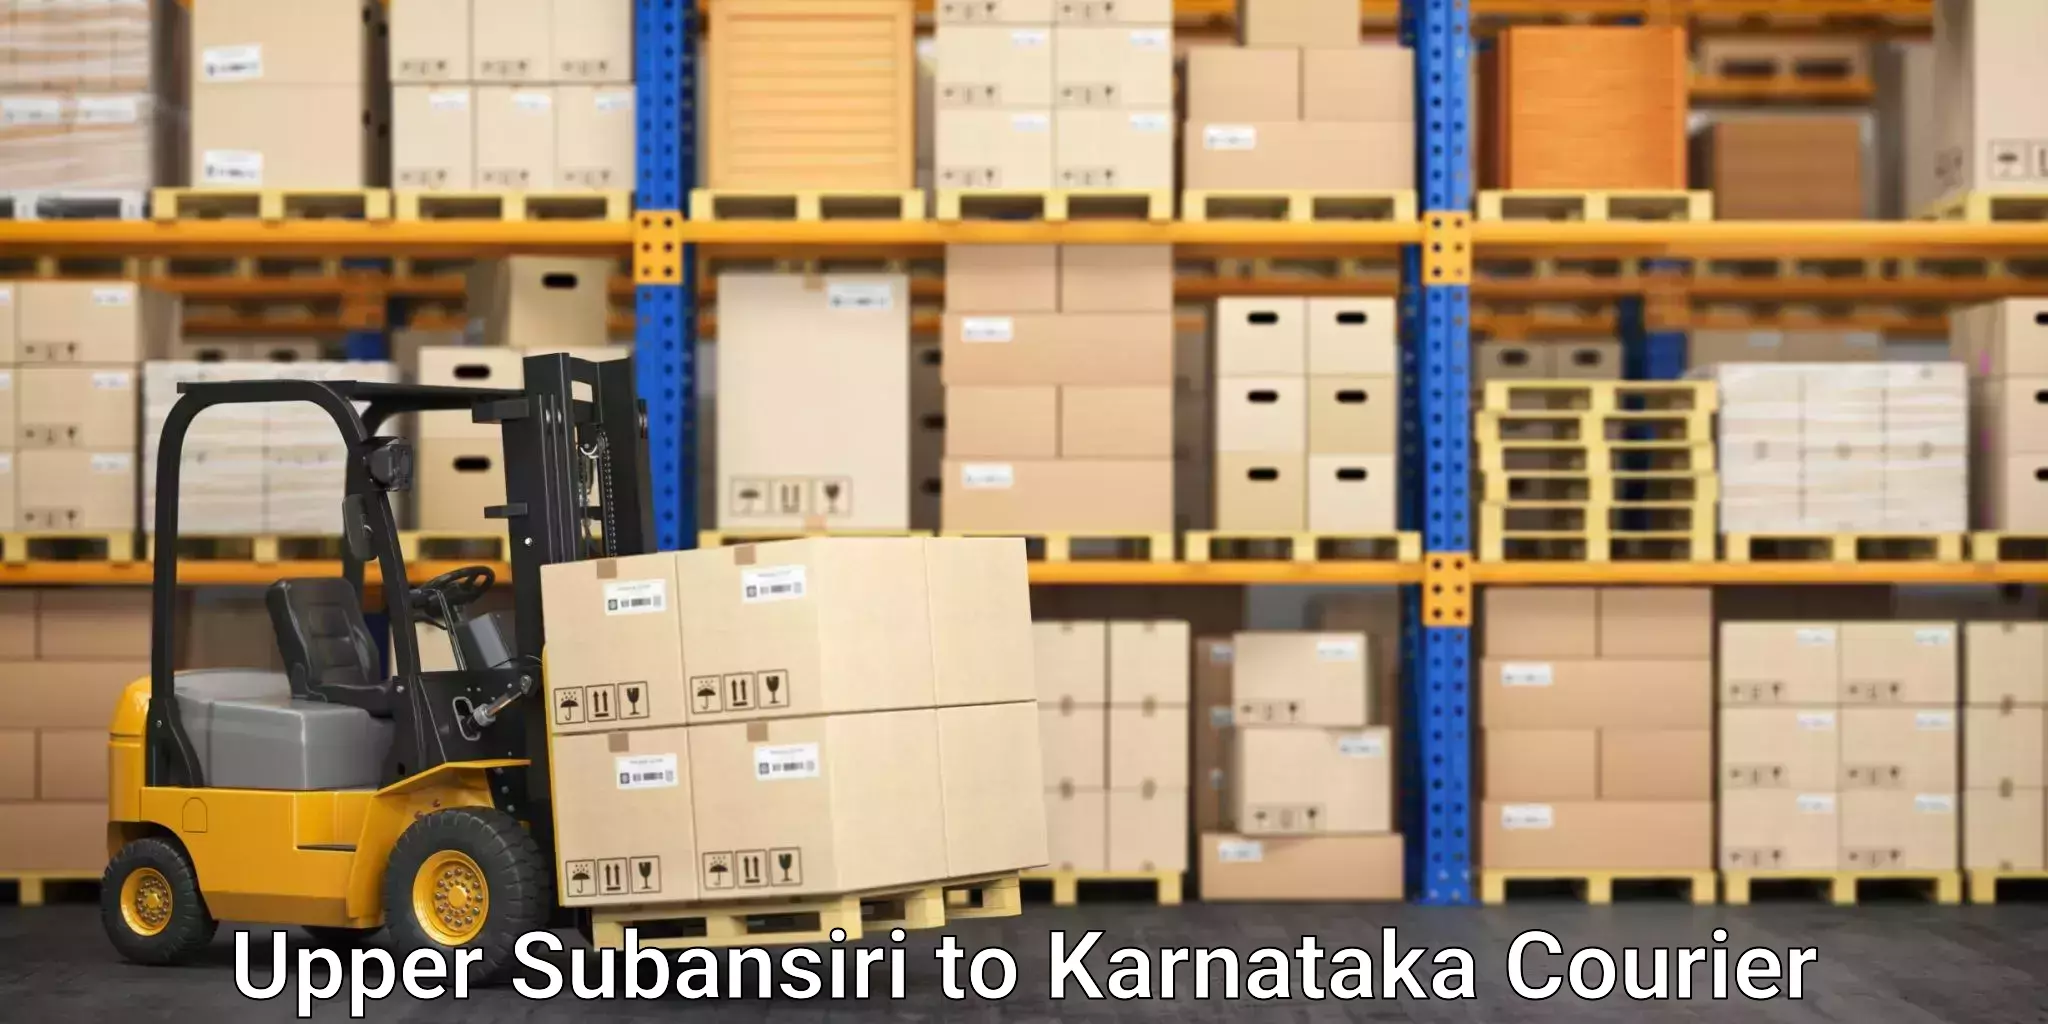 Specialized shipment handling in Upper Subansiri to Karnataka